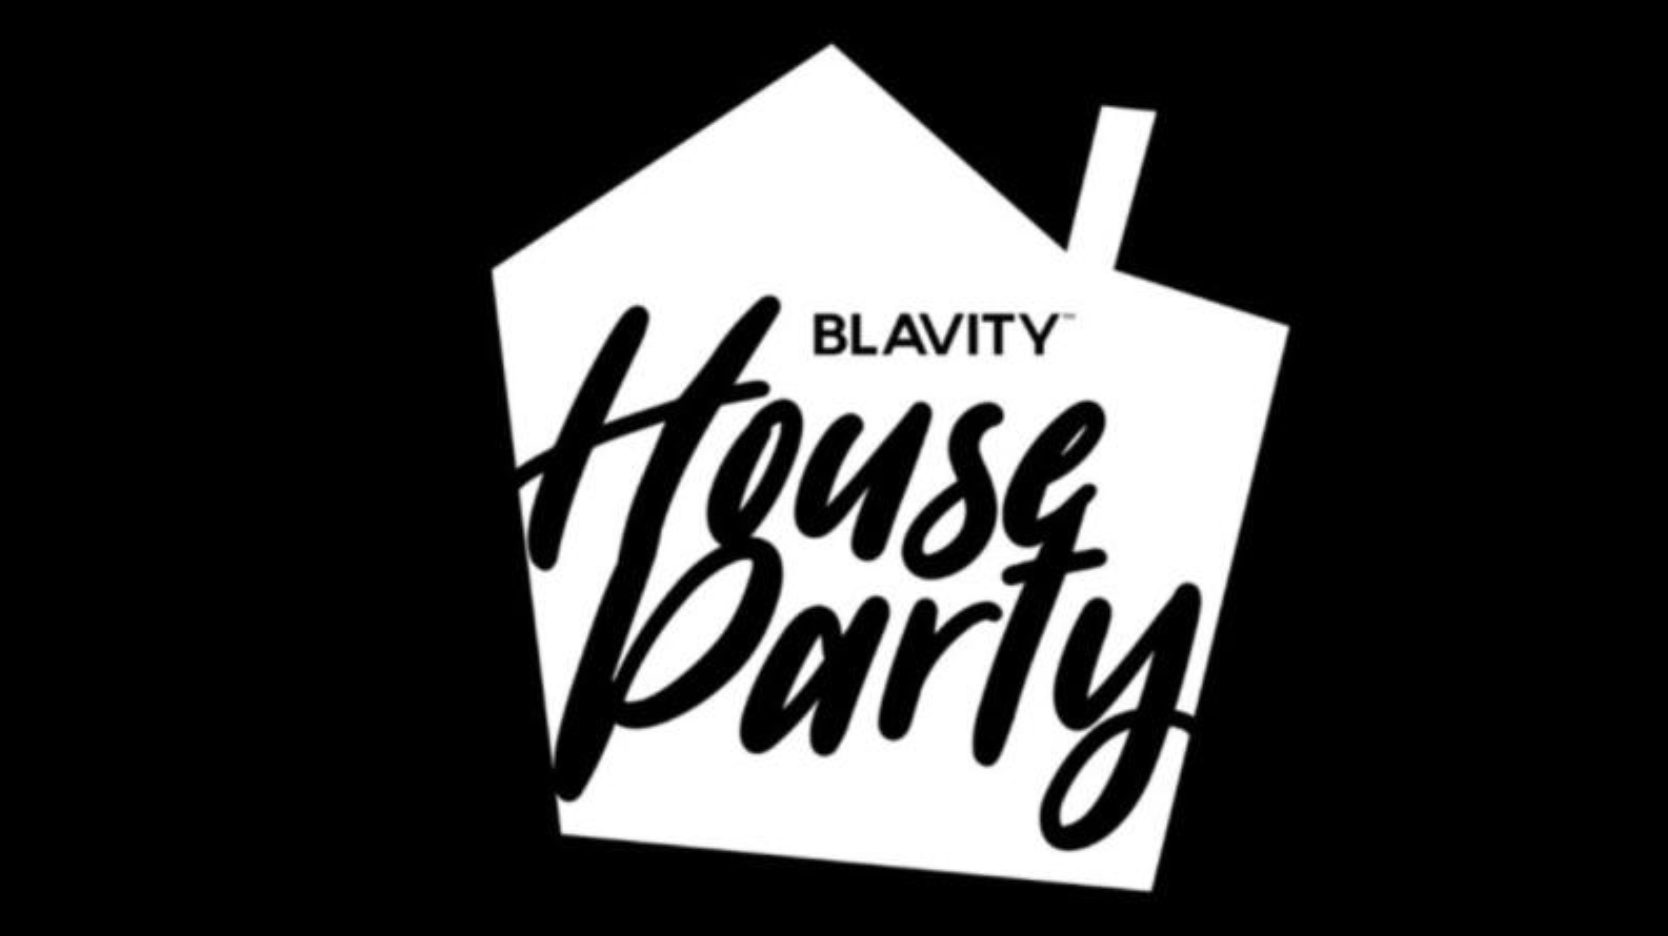 Blavity House Party